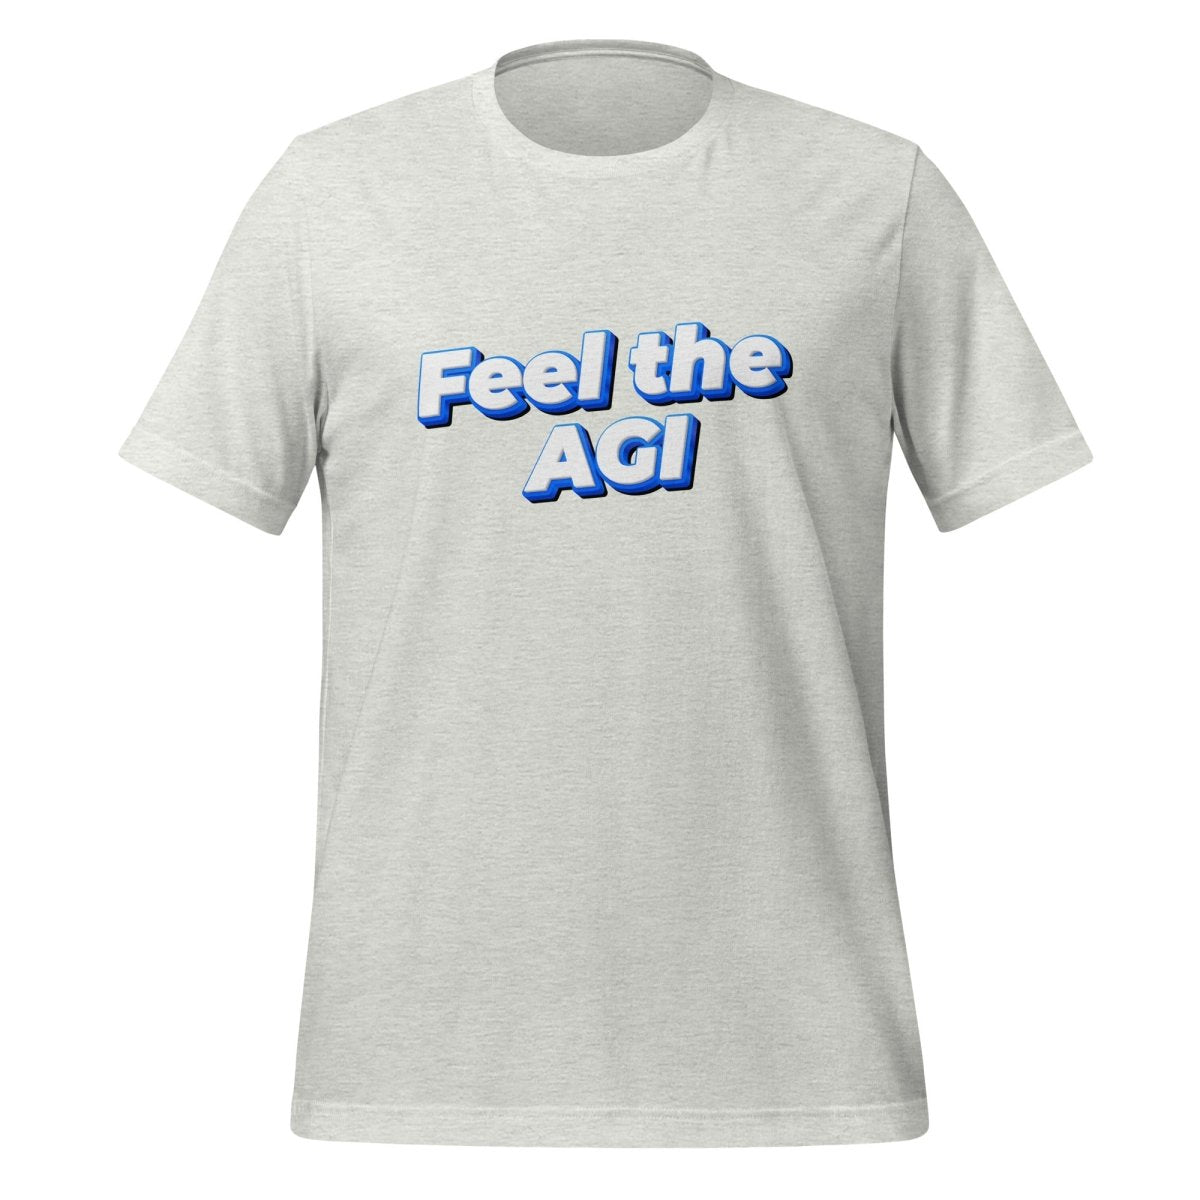 Feel the AGI T - Shirt 2 (unisex) - Ash - AI Store